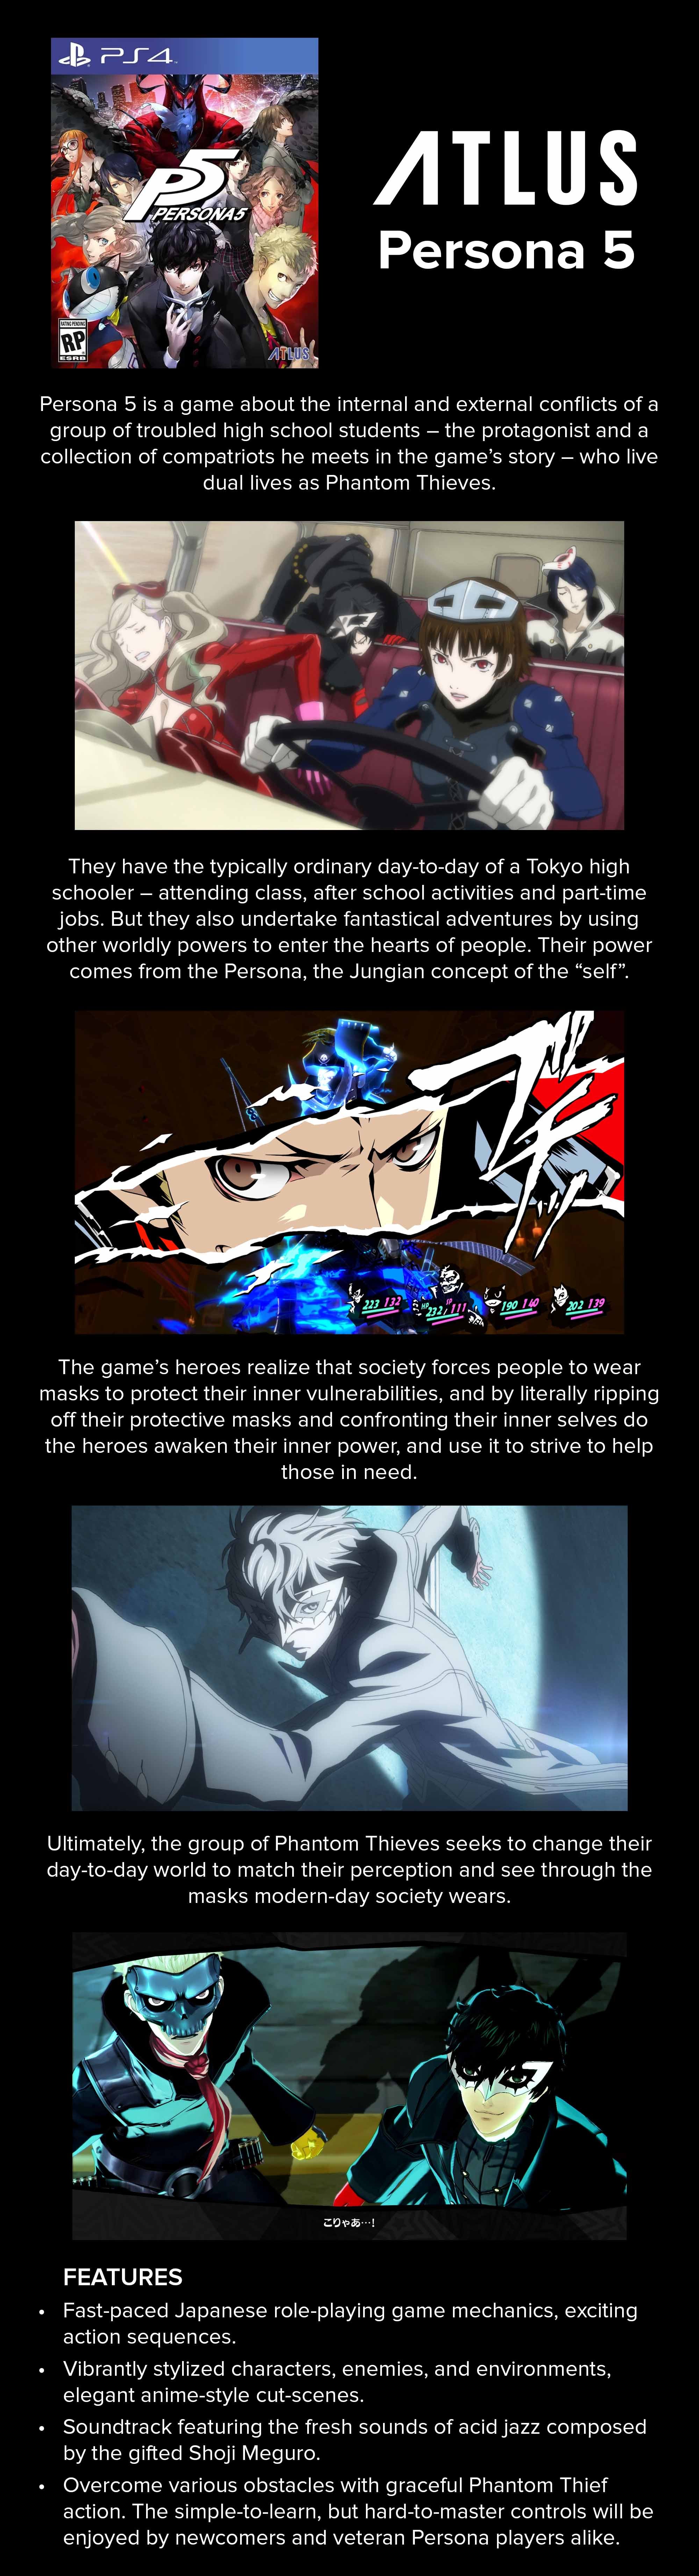 Persona 5 - (Intl Version) - PlayStation 4 (PS4)